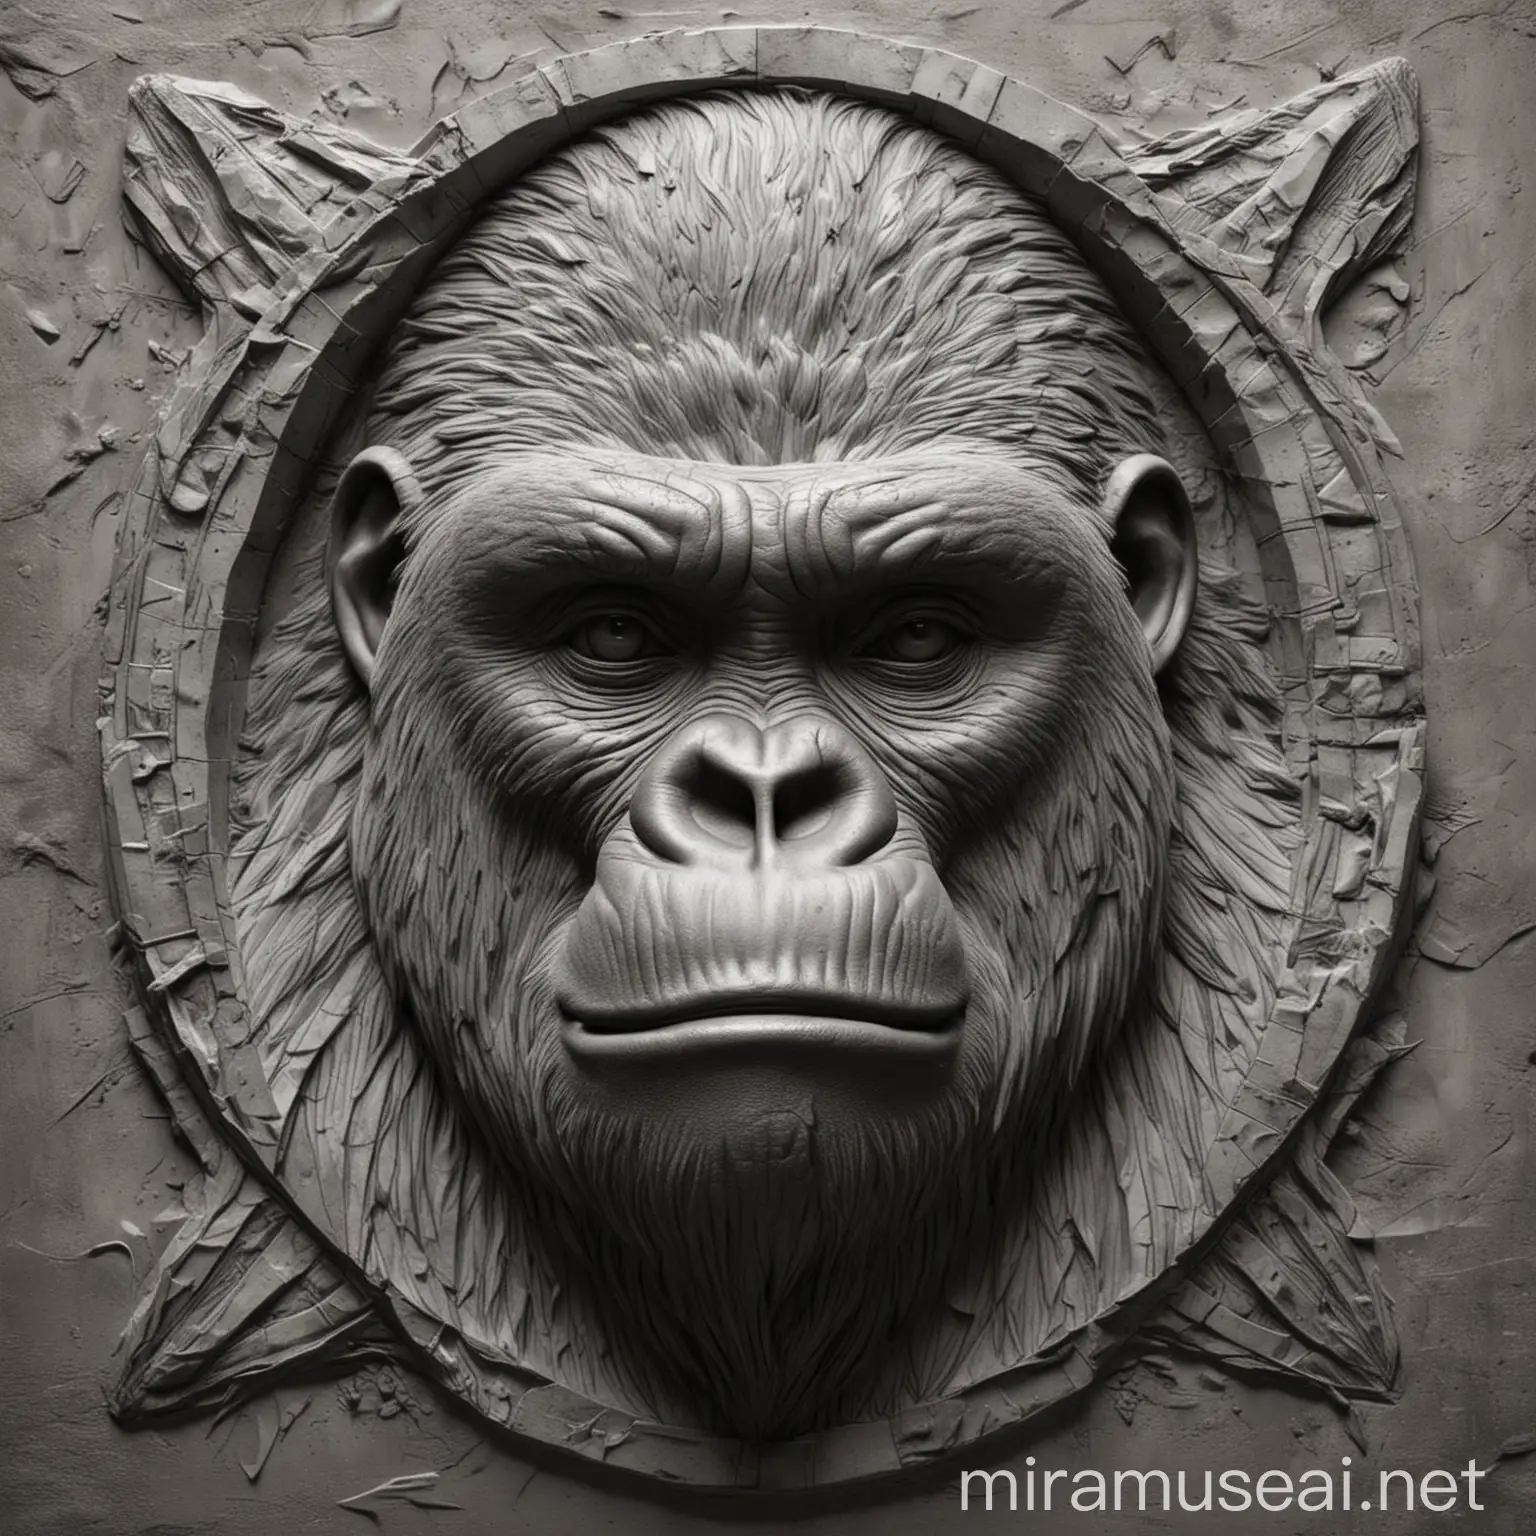 Bas relief grayscale gorilla
